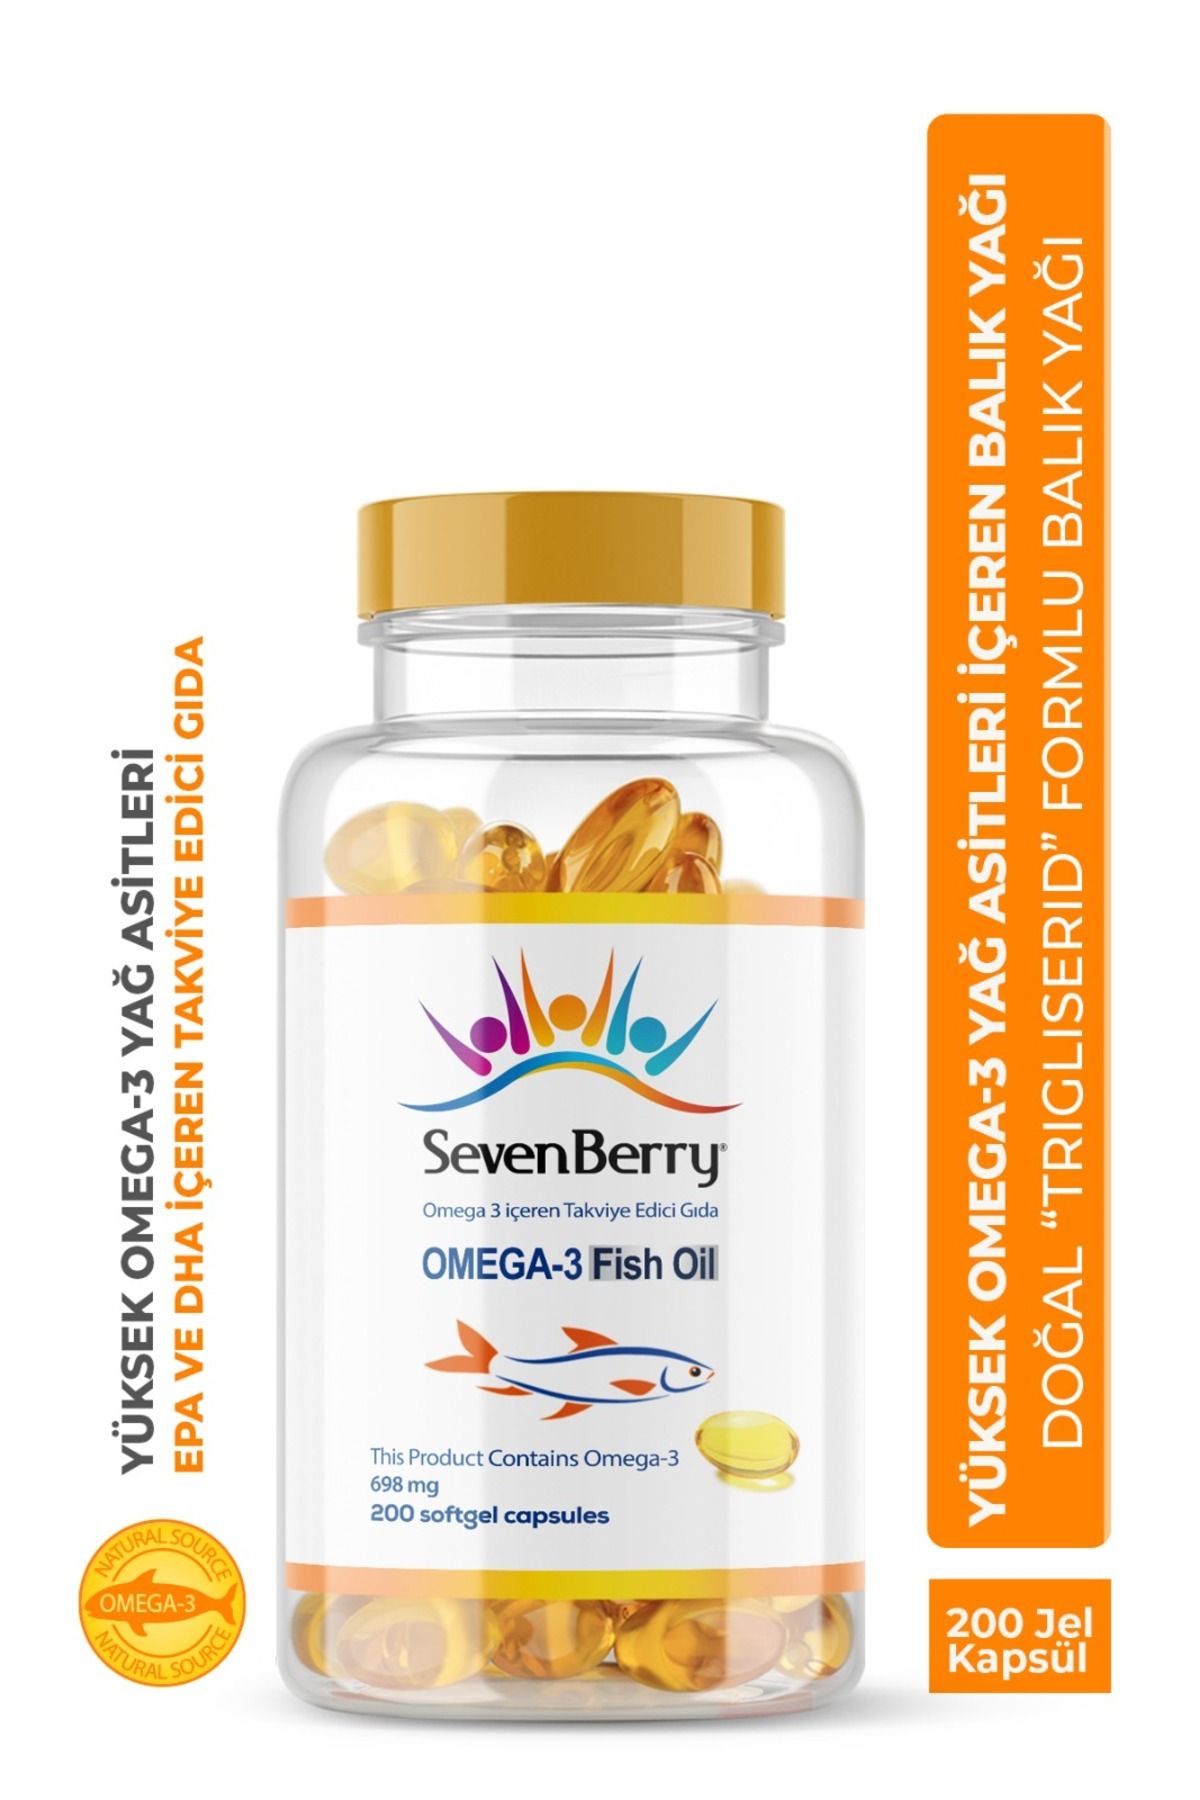 Seven Berry Omega 3 Balık Yağı 200 Jel Kapsül, Premium Fish Oil, Form,dha-epa, A-d-e Vitaminleri